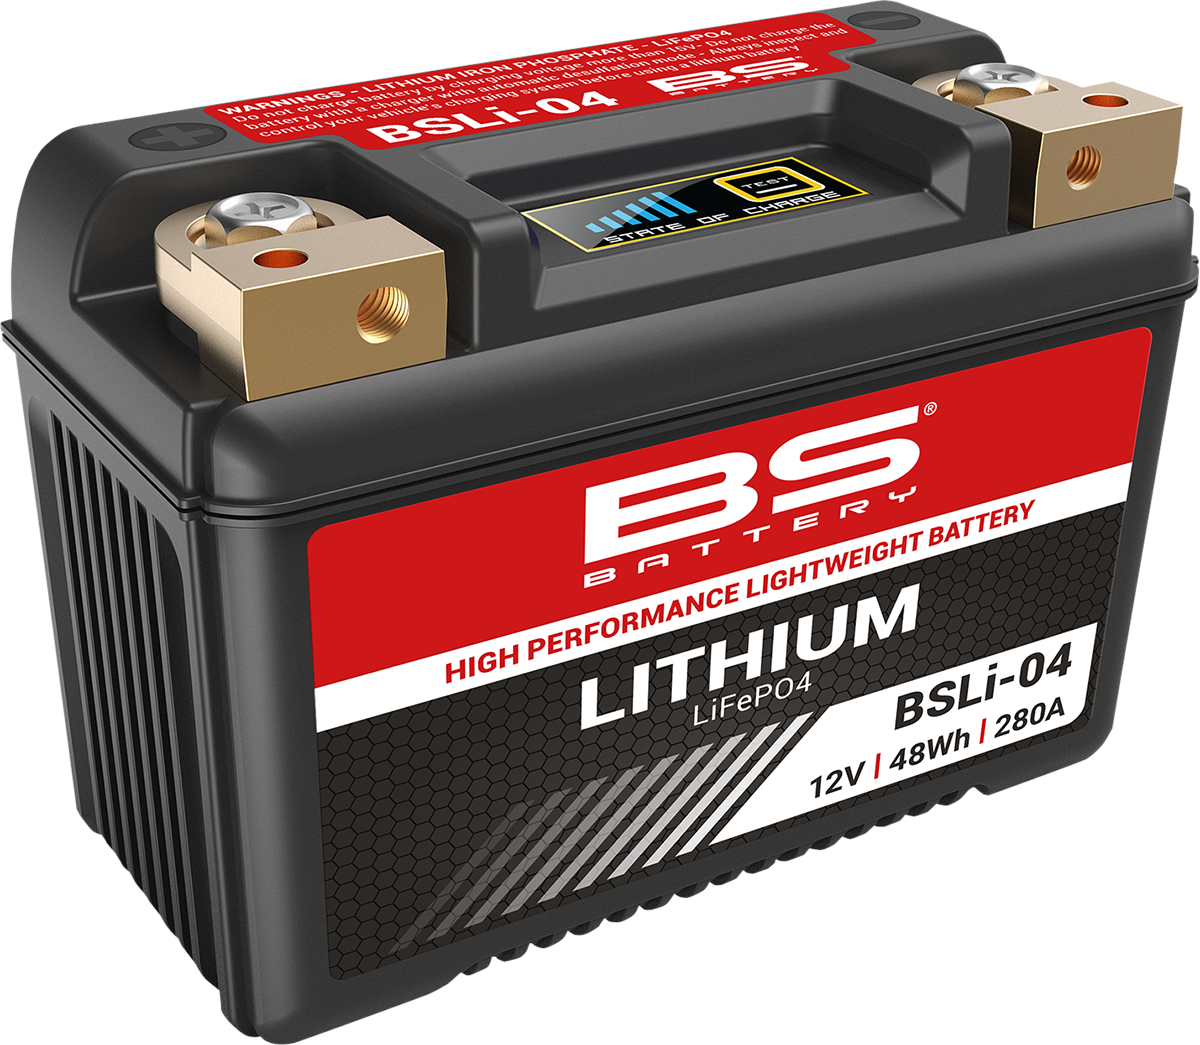 BS BATTERY Lithium Battery - BSLi-04/06 360104